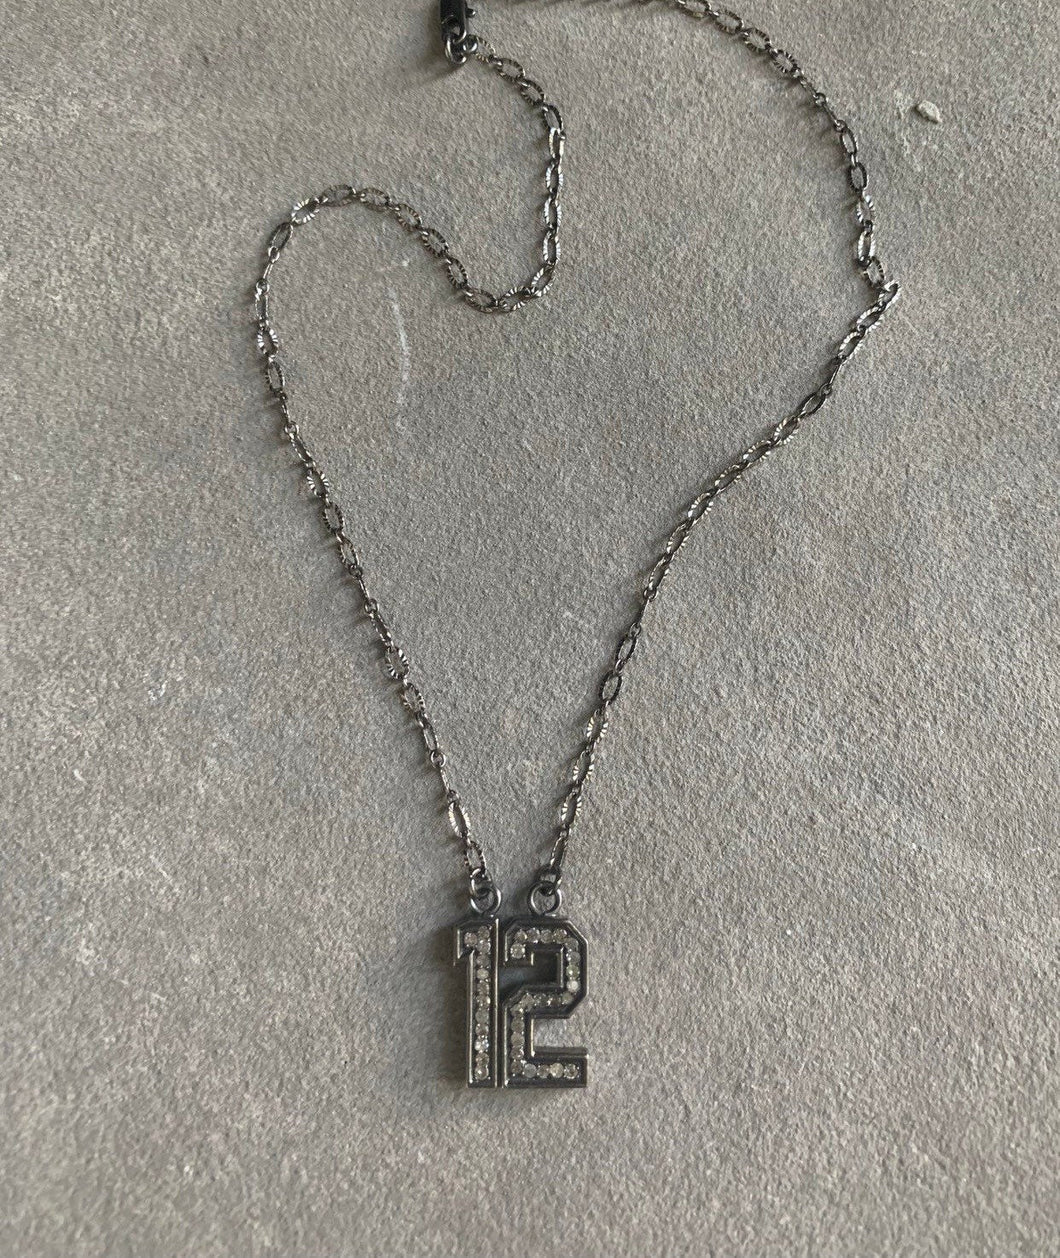 Seattle Seahawks 12th (wo)man diamond charm necklace